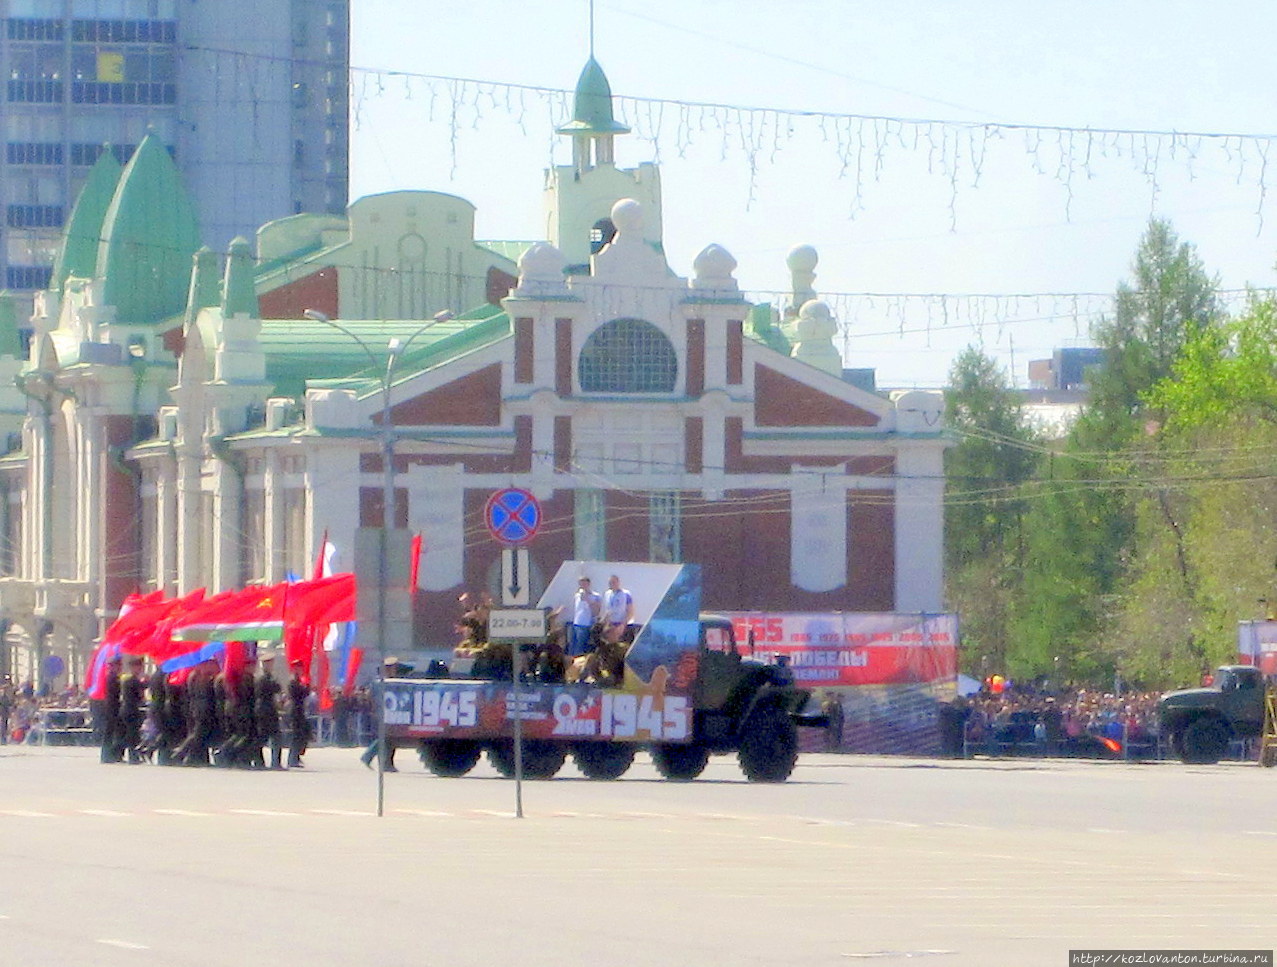 После парада по площади разъезжаются 7 машин с артистическими бригадами. Новосибирск, Россия